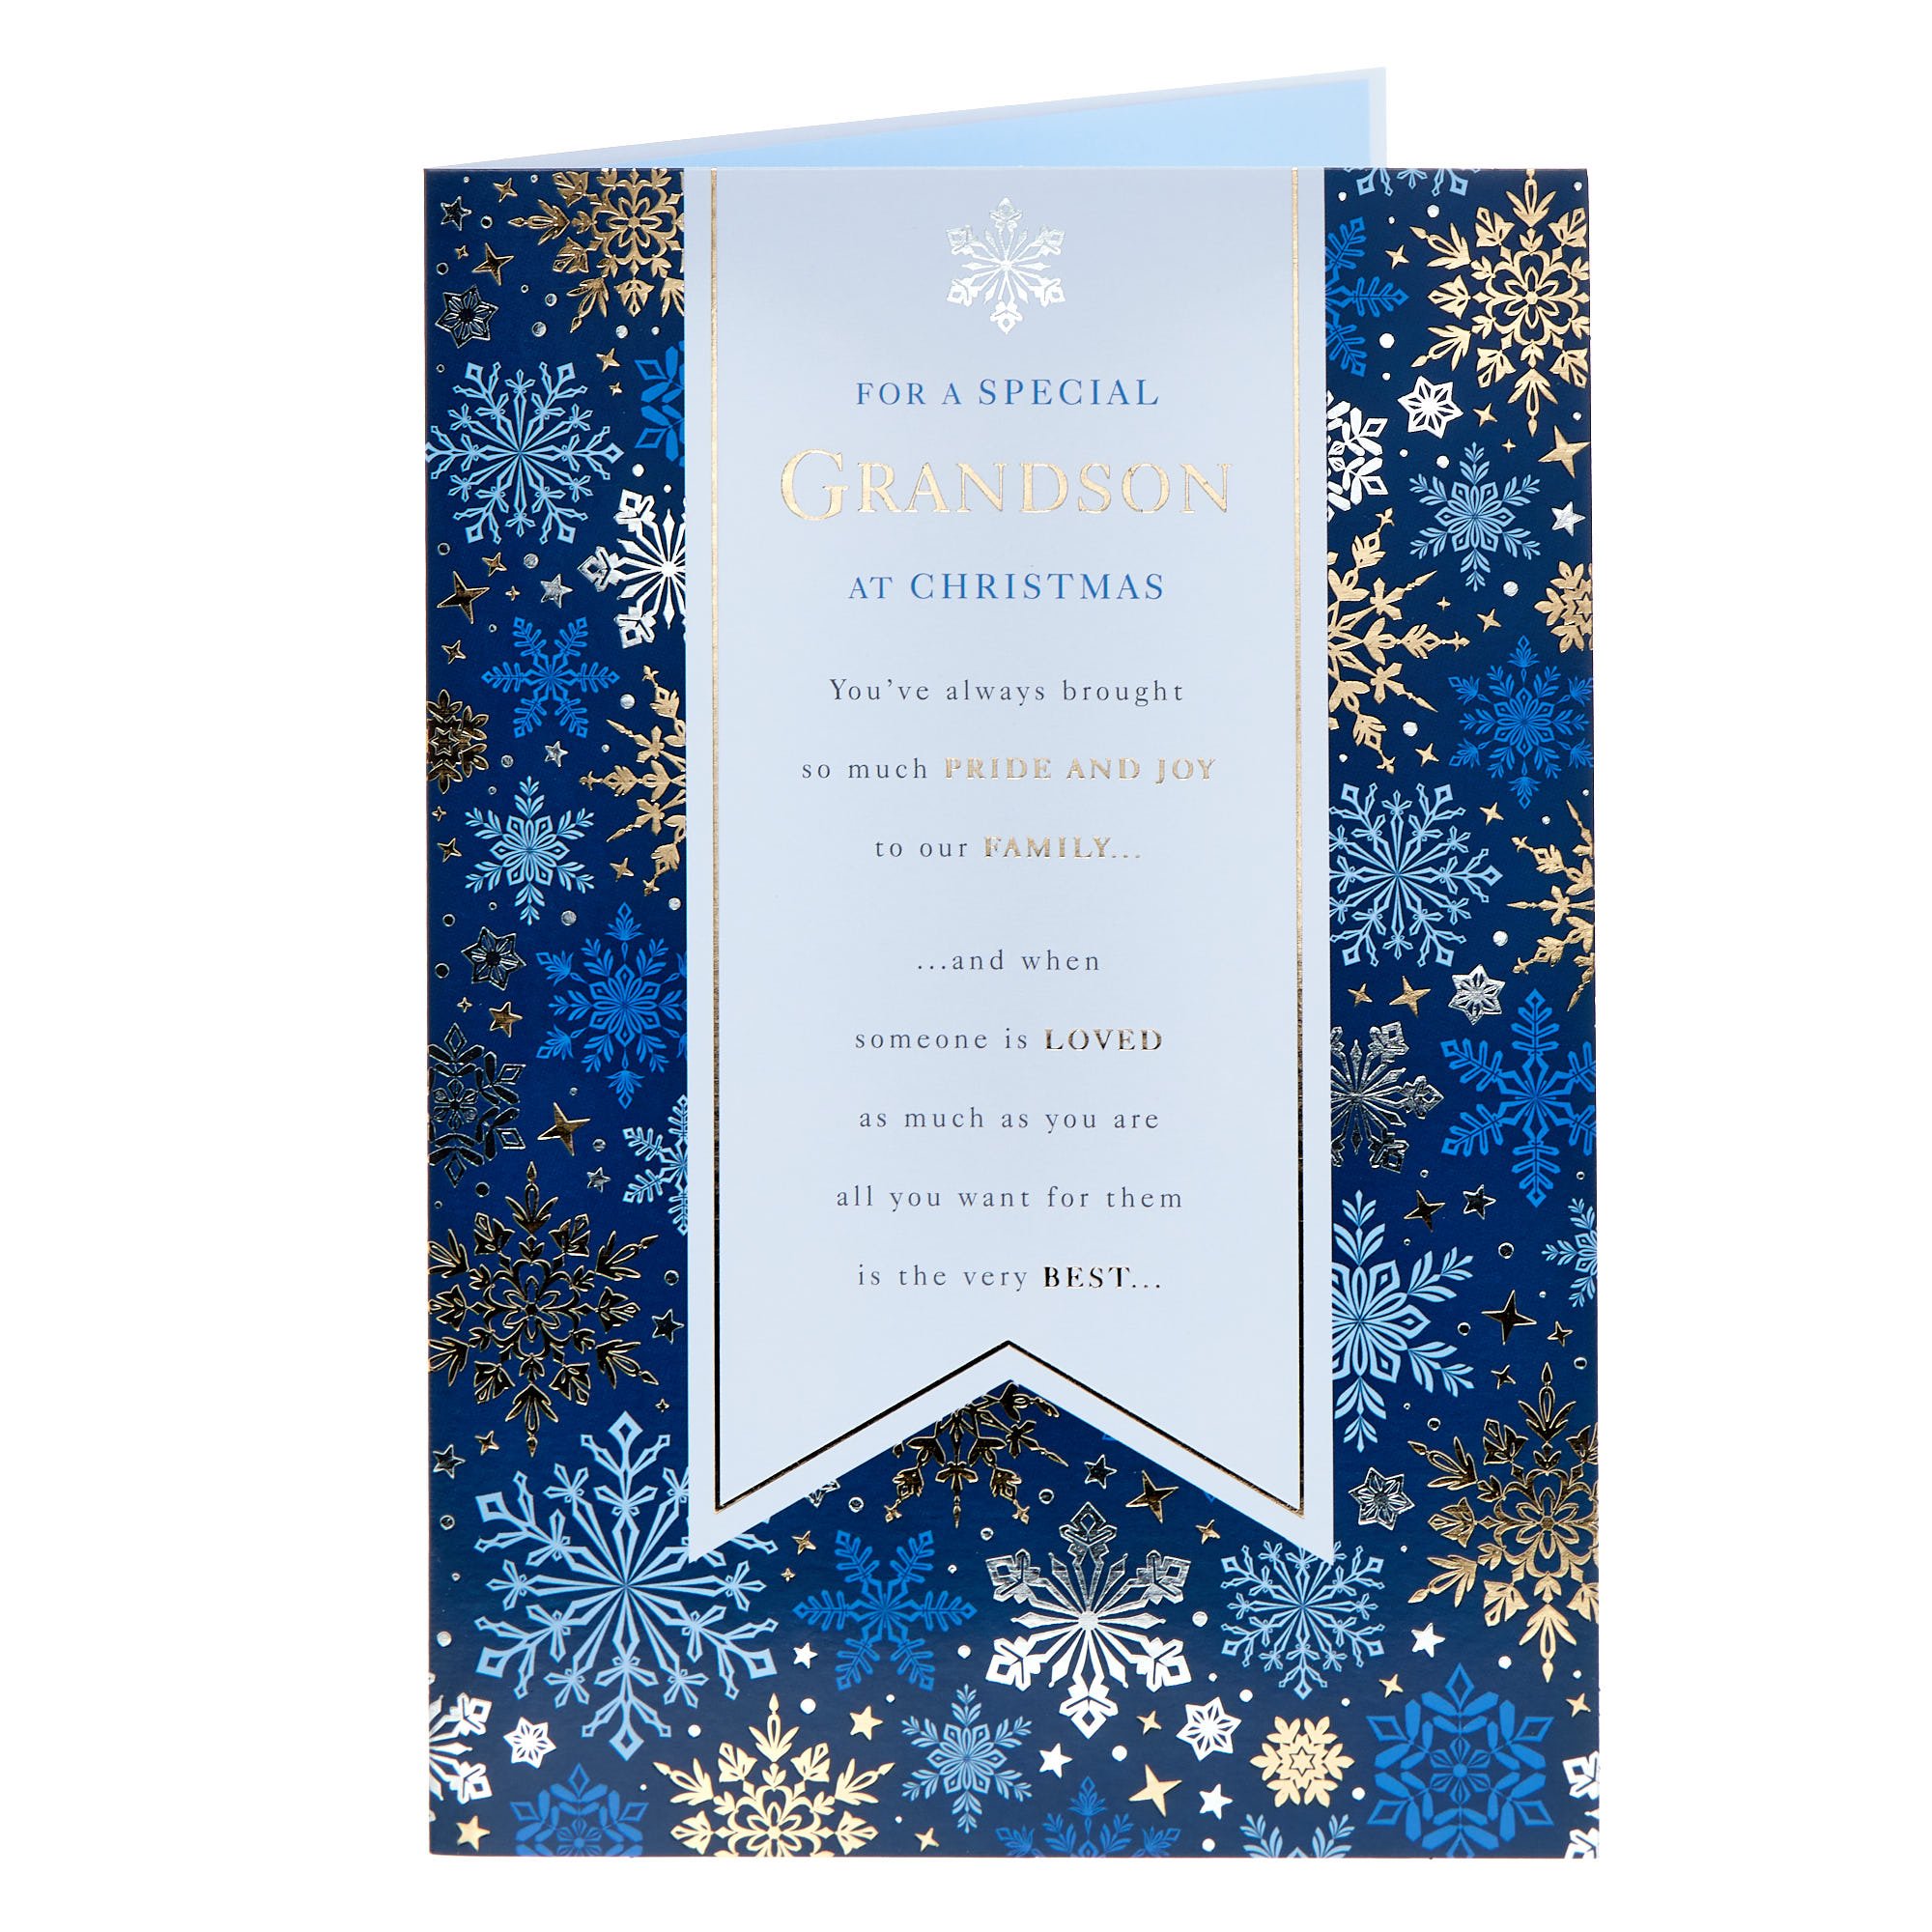 Grandson Verse & Snowflakes Christmas Card